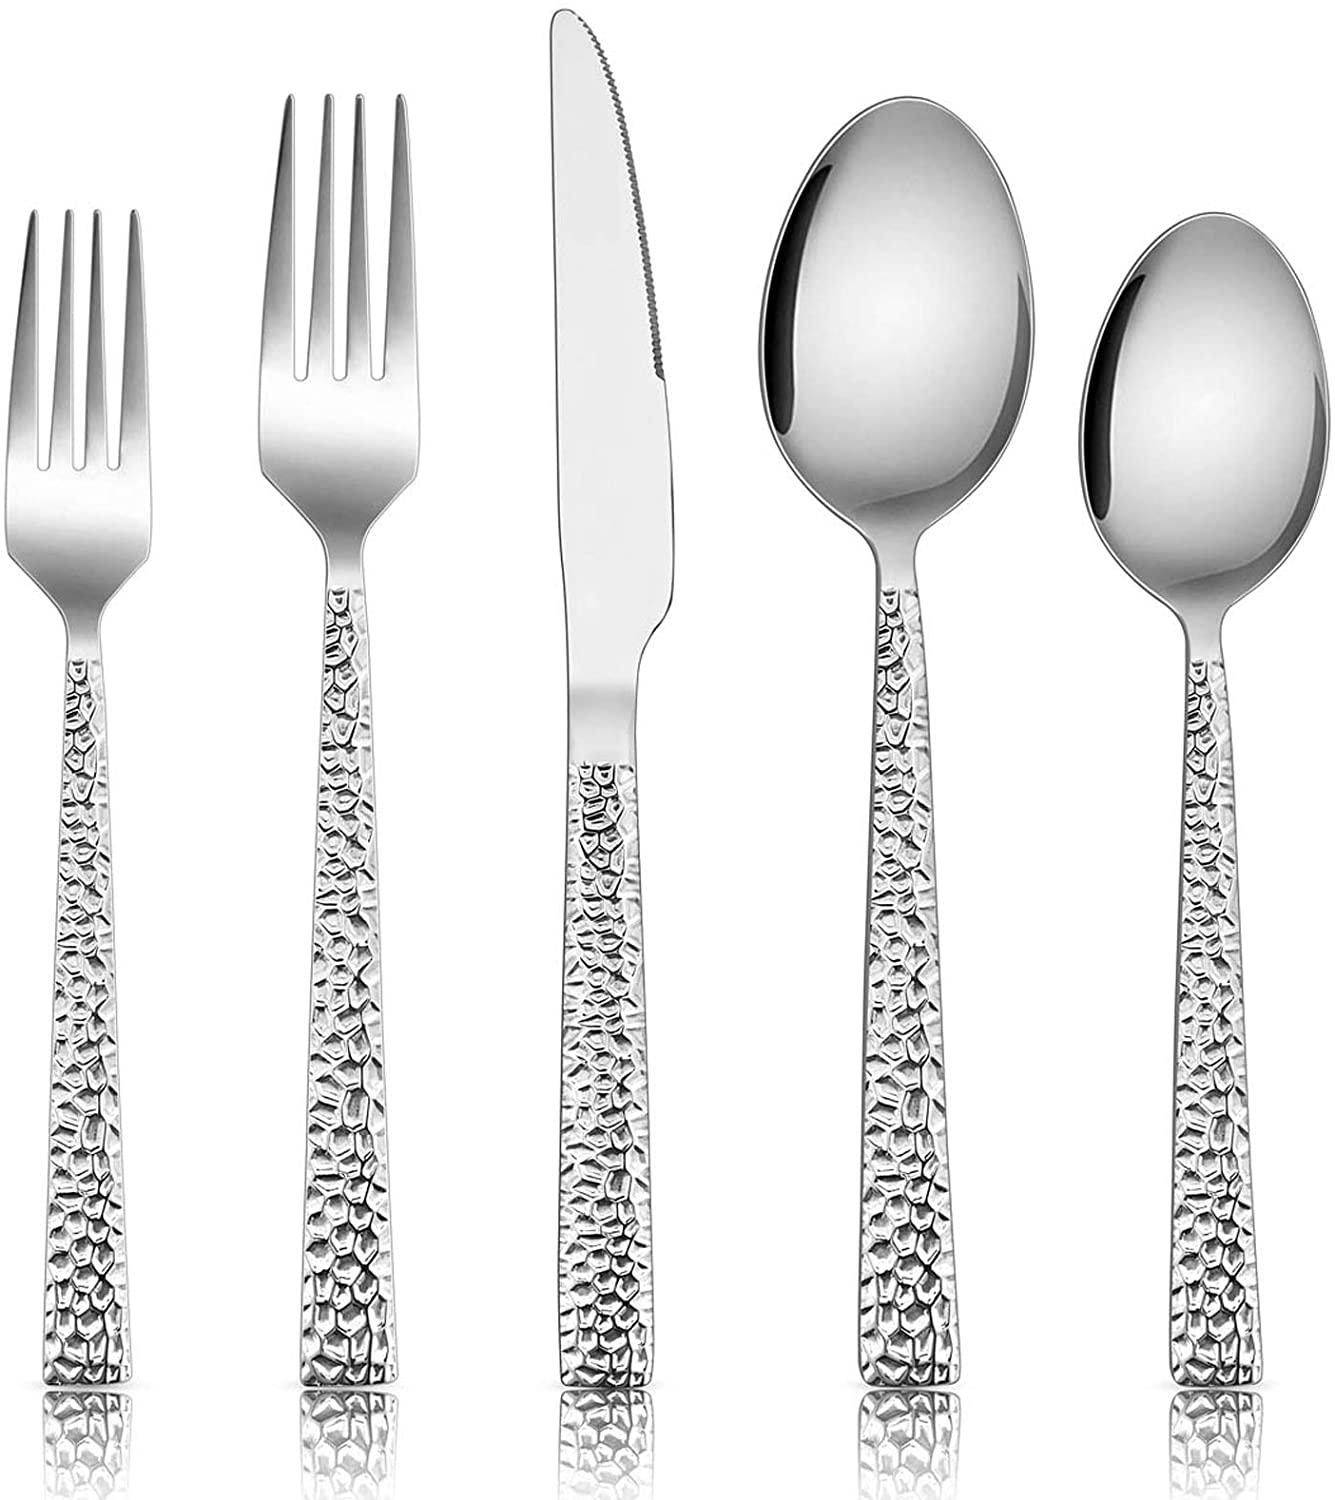 https://www.dontwasteyourmoney.com/wp-content/uploads/2022/03/e-far-hammered-handles-stainless-steel-cutlery-set-20-piece-cutlery-sets.jpg